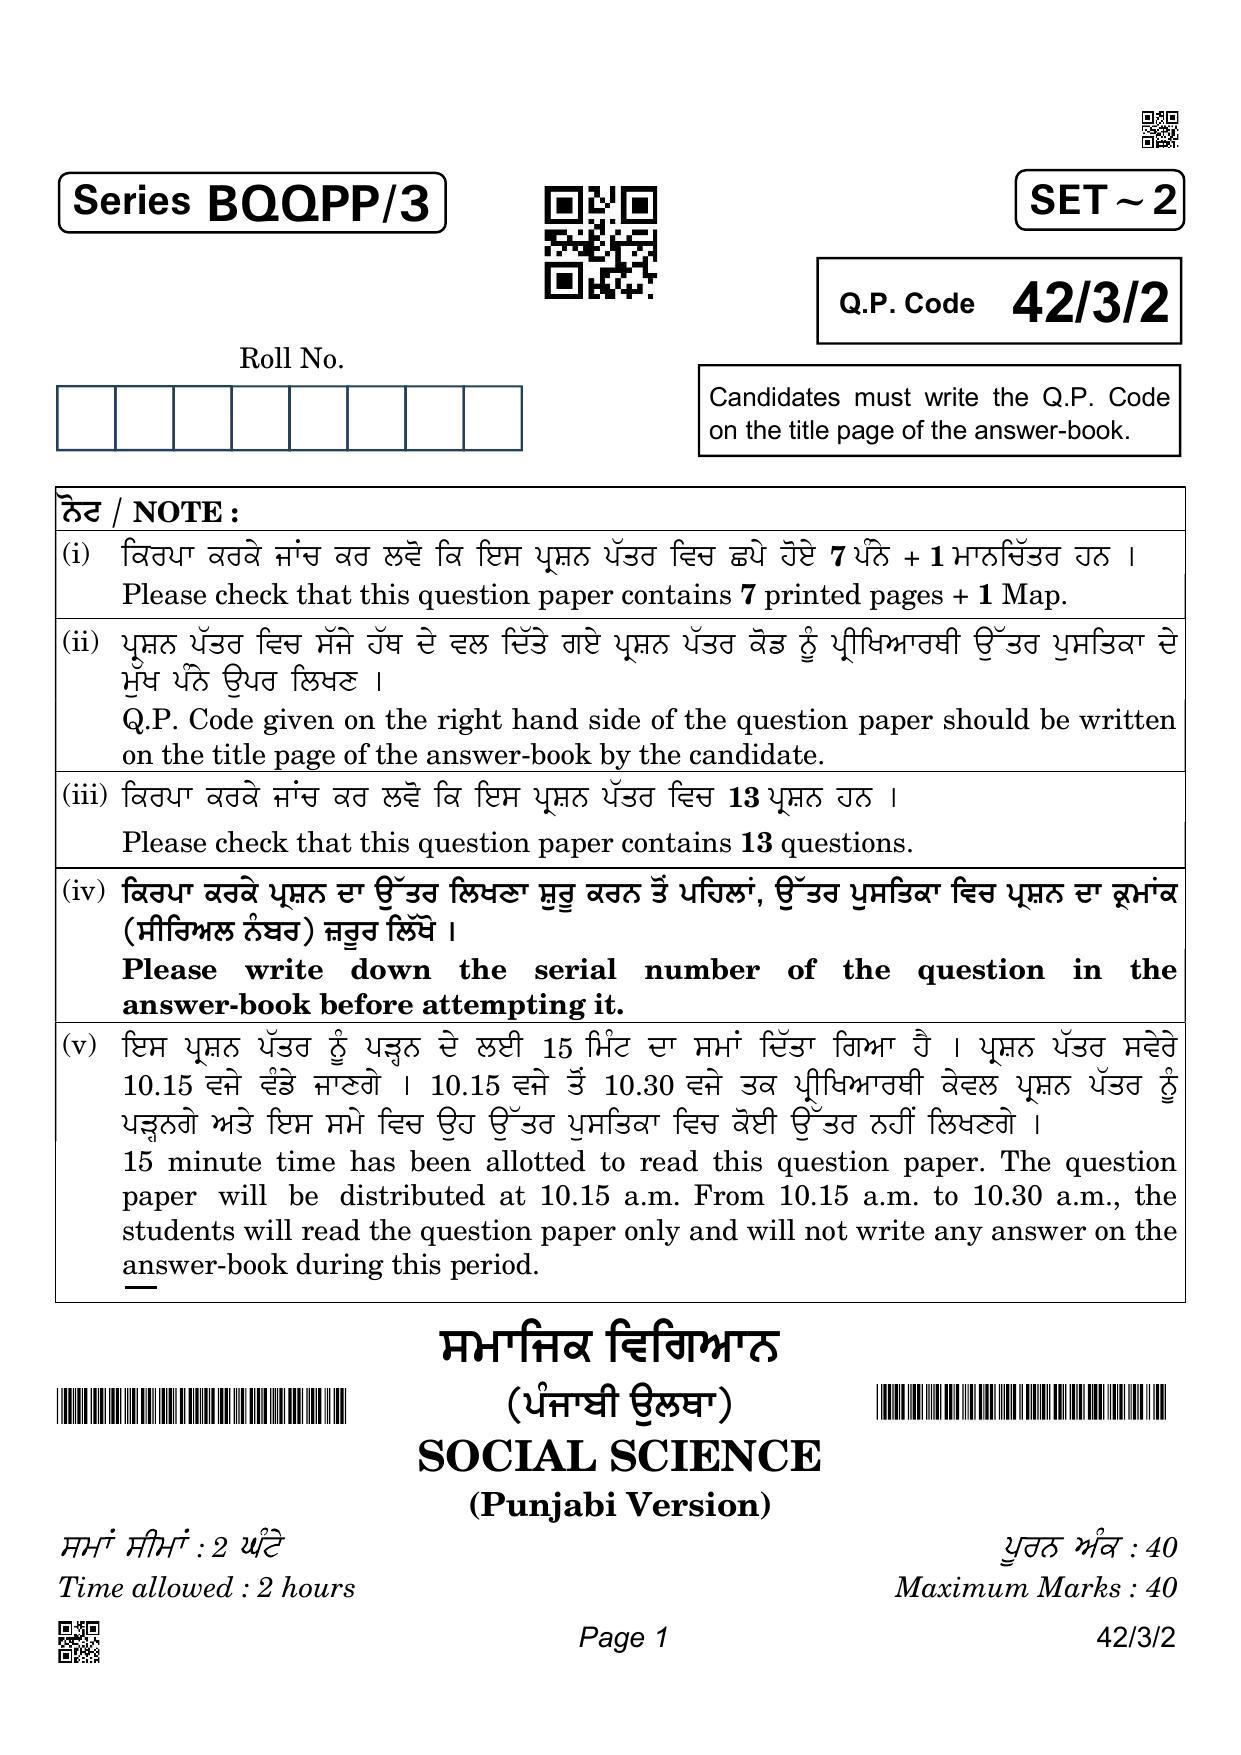 CBSE Class 10 42-3-2 Social Science Punjabi Version 2022 Question Paper - Page 1